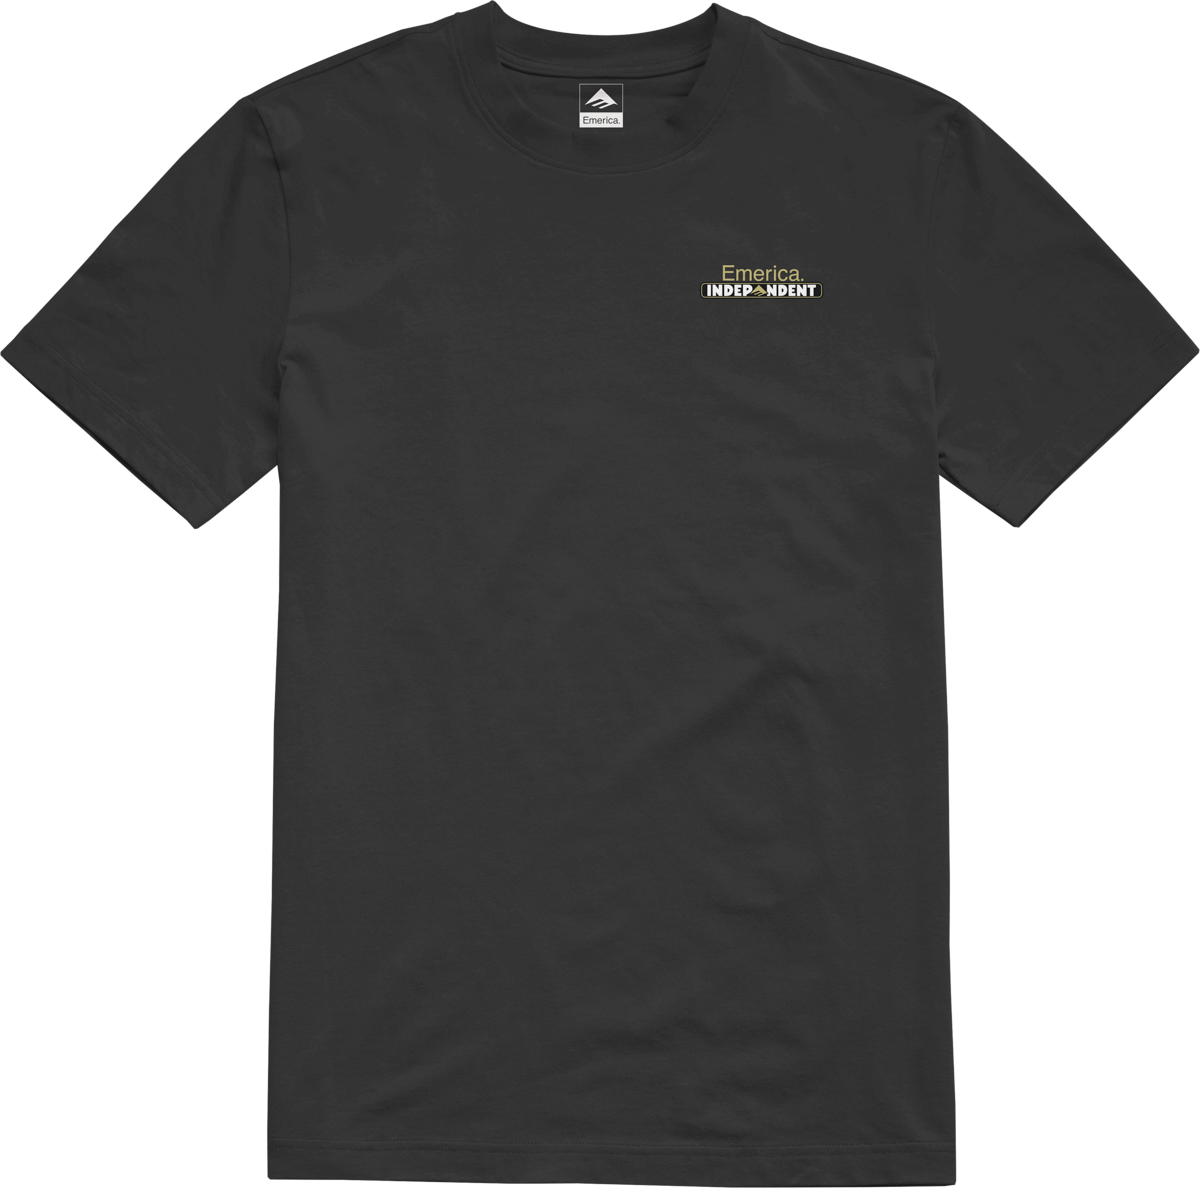 Emerica X Independent Bar Tee Mens Black T-Shirt